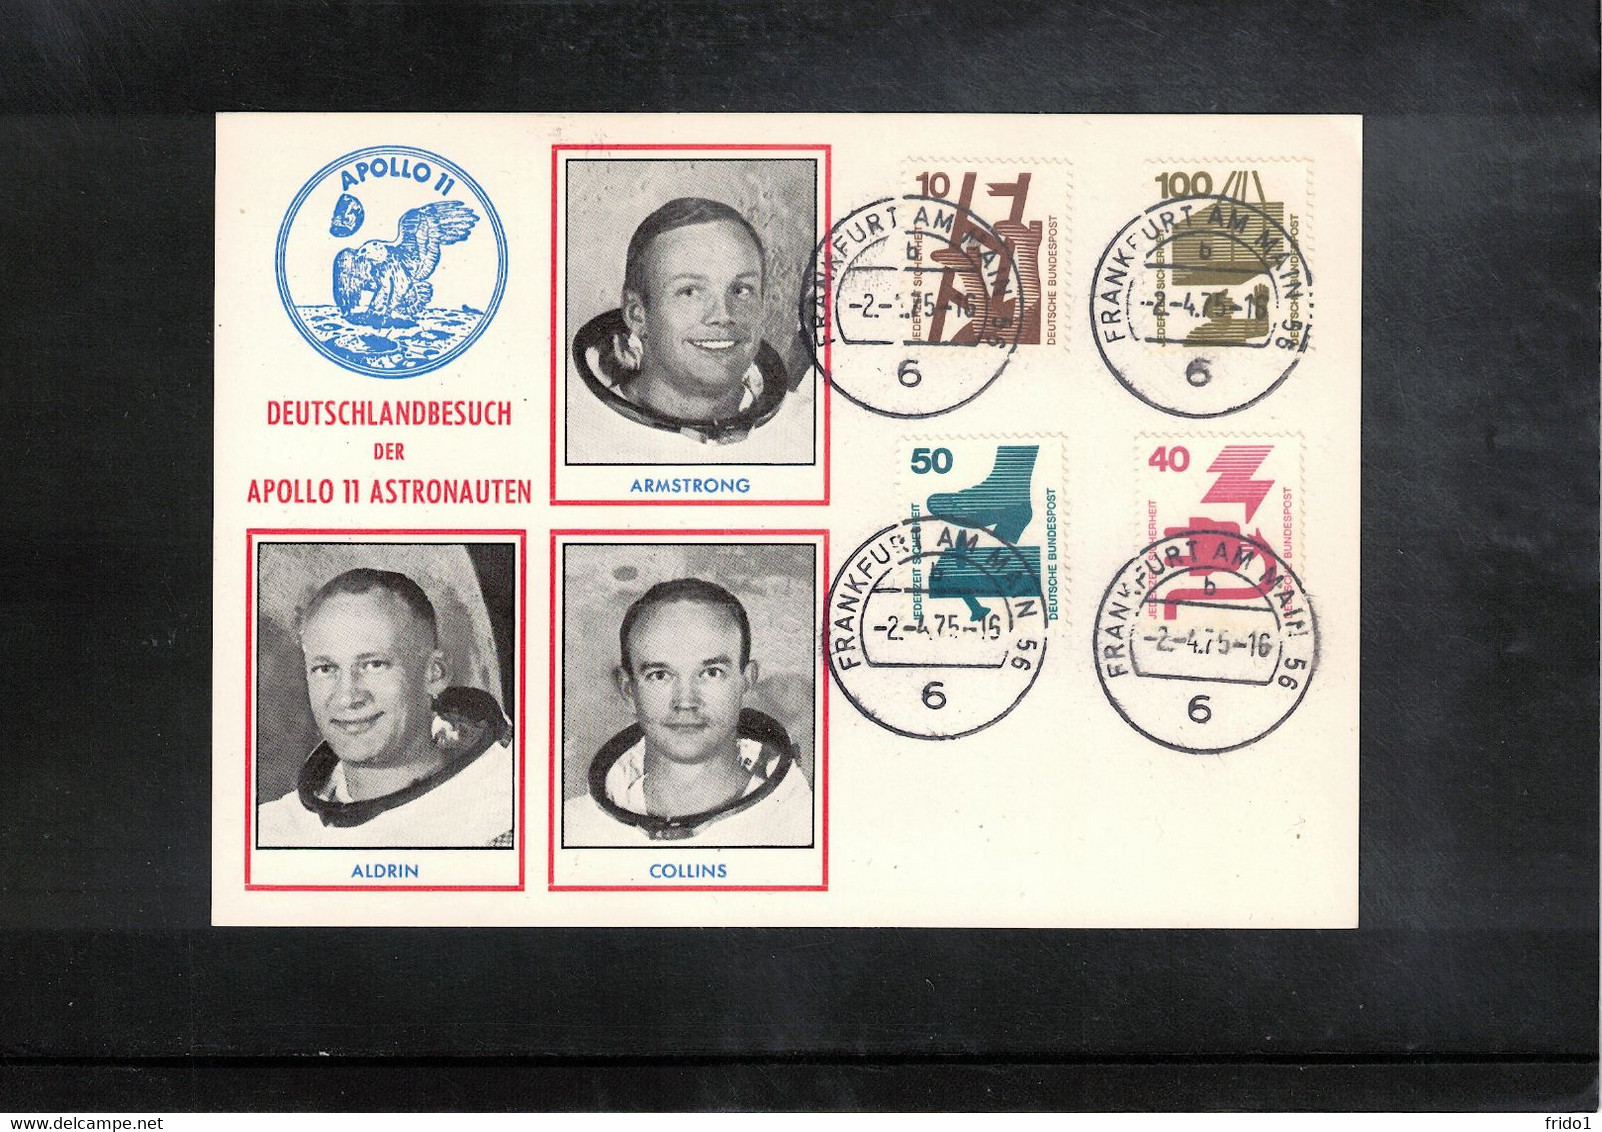 USA + Germany 1975 Space / Raumfahrt  Apollo 11 Visit Of Astronauts In Germany Interesting Postcard - Stati Uniti